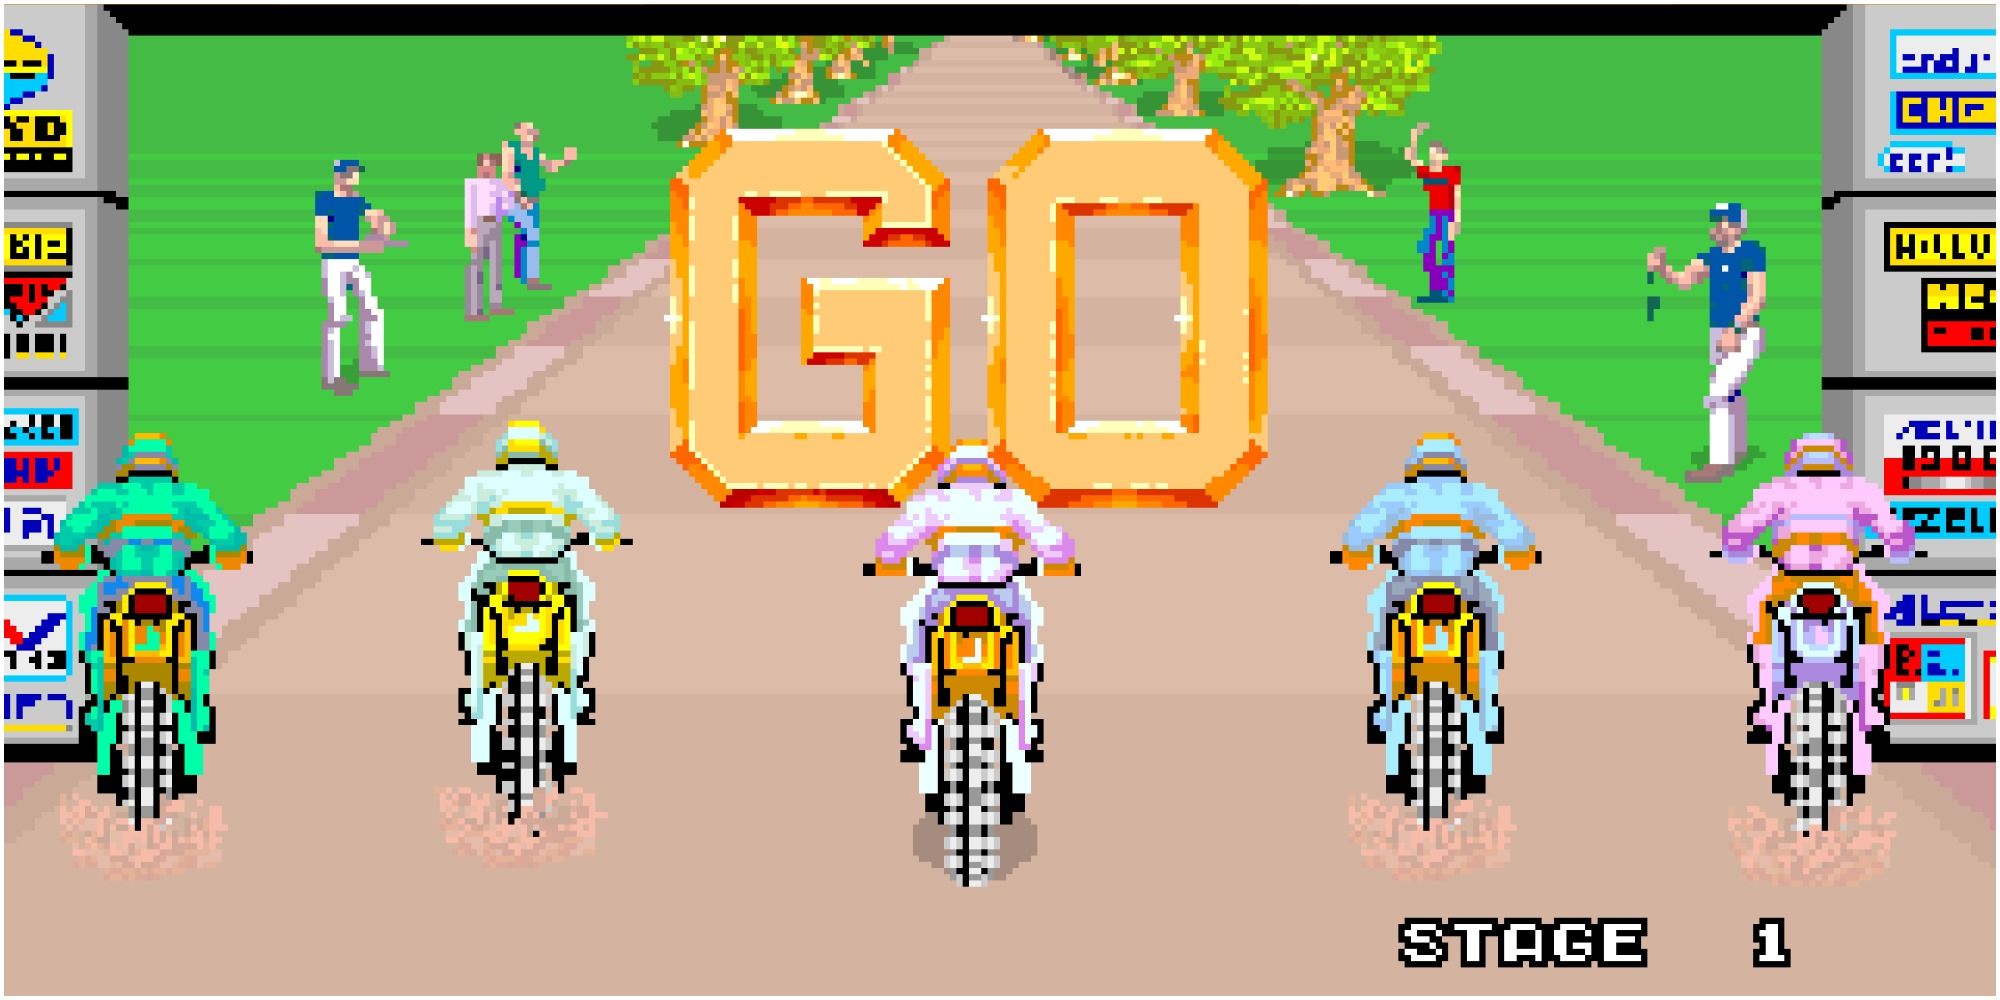 Enduro Racer Sega Master System Start Race Screenshot 5 Bikers